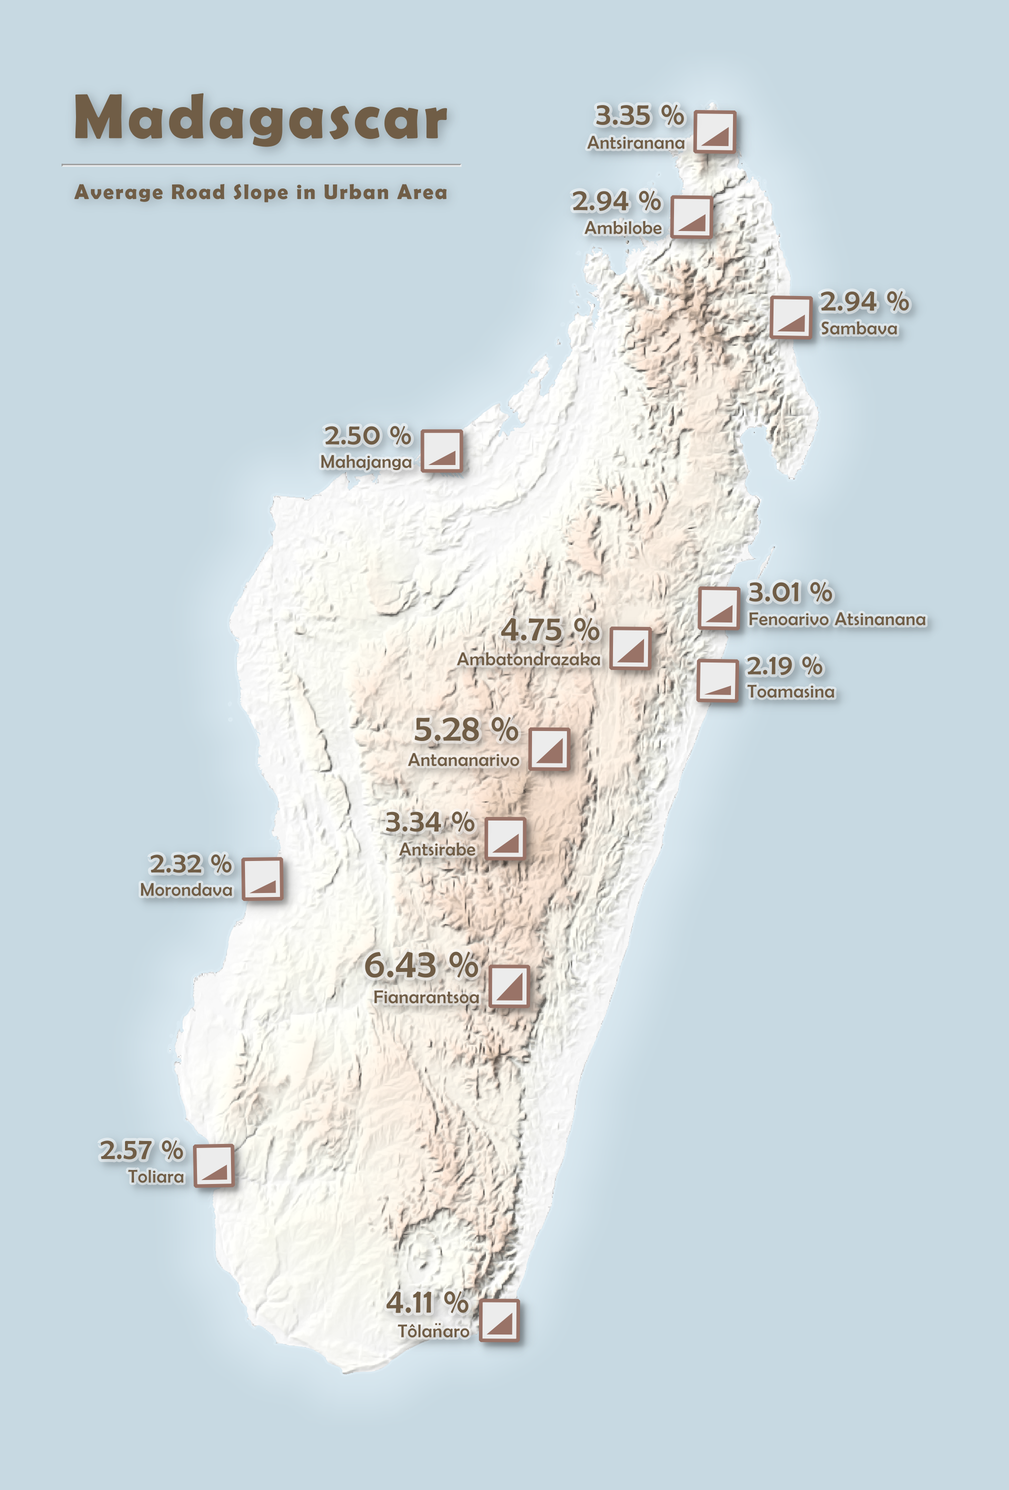 Madagascar average road slope in major urban areas